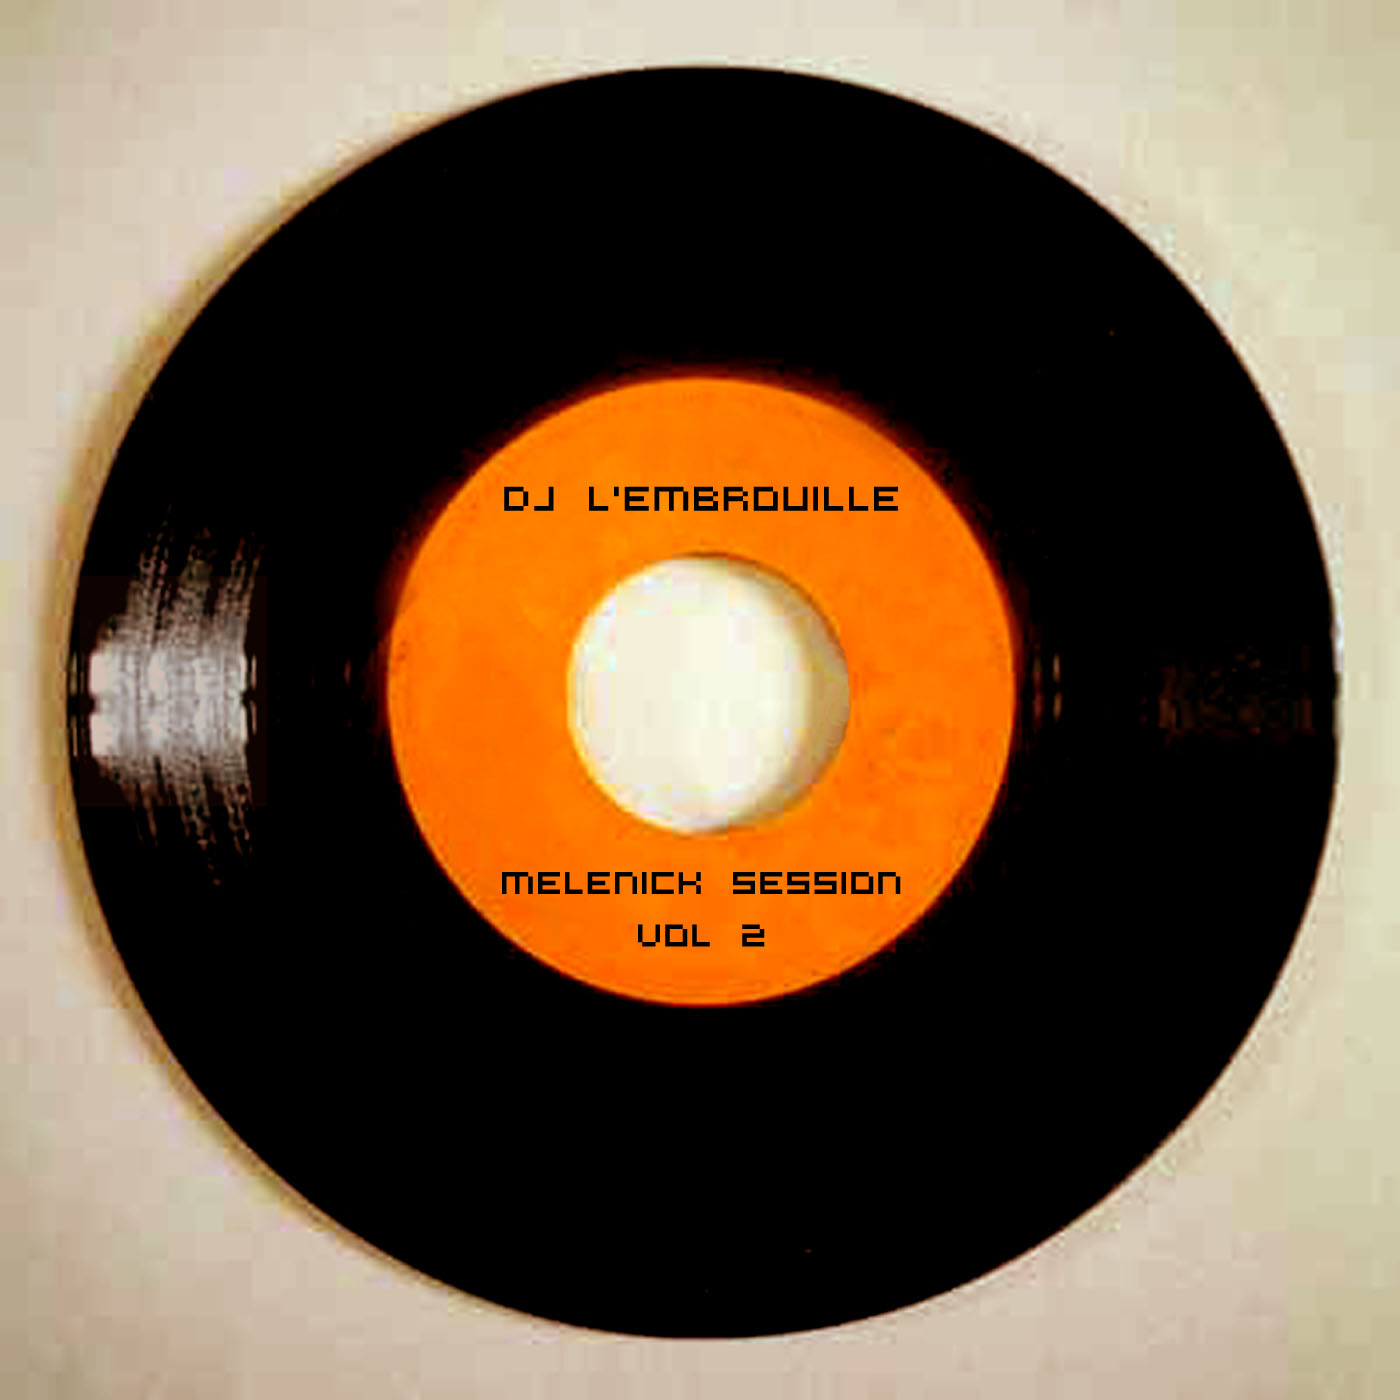 http://www.mixotic.net/mixes/008_-_DJ_L_embrouille_-_Melenick_Session_Vol_2/cover_large.jpg